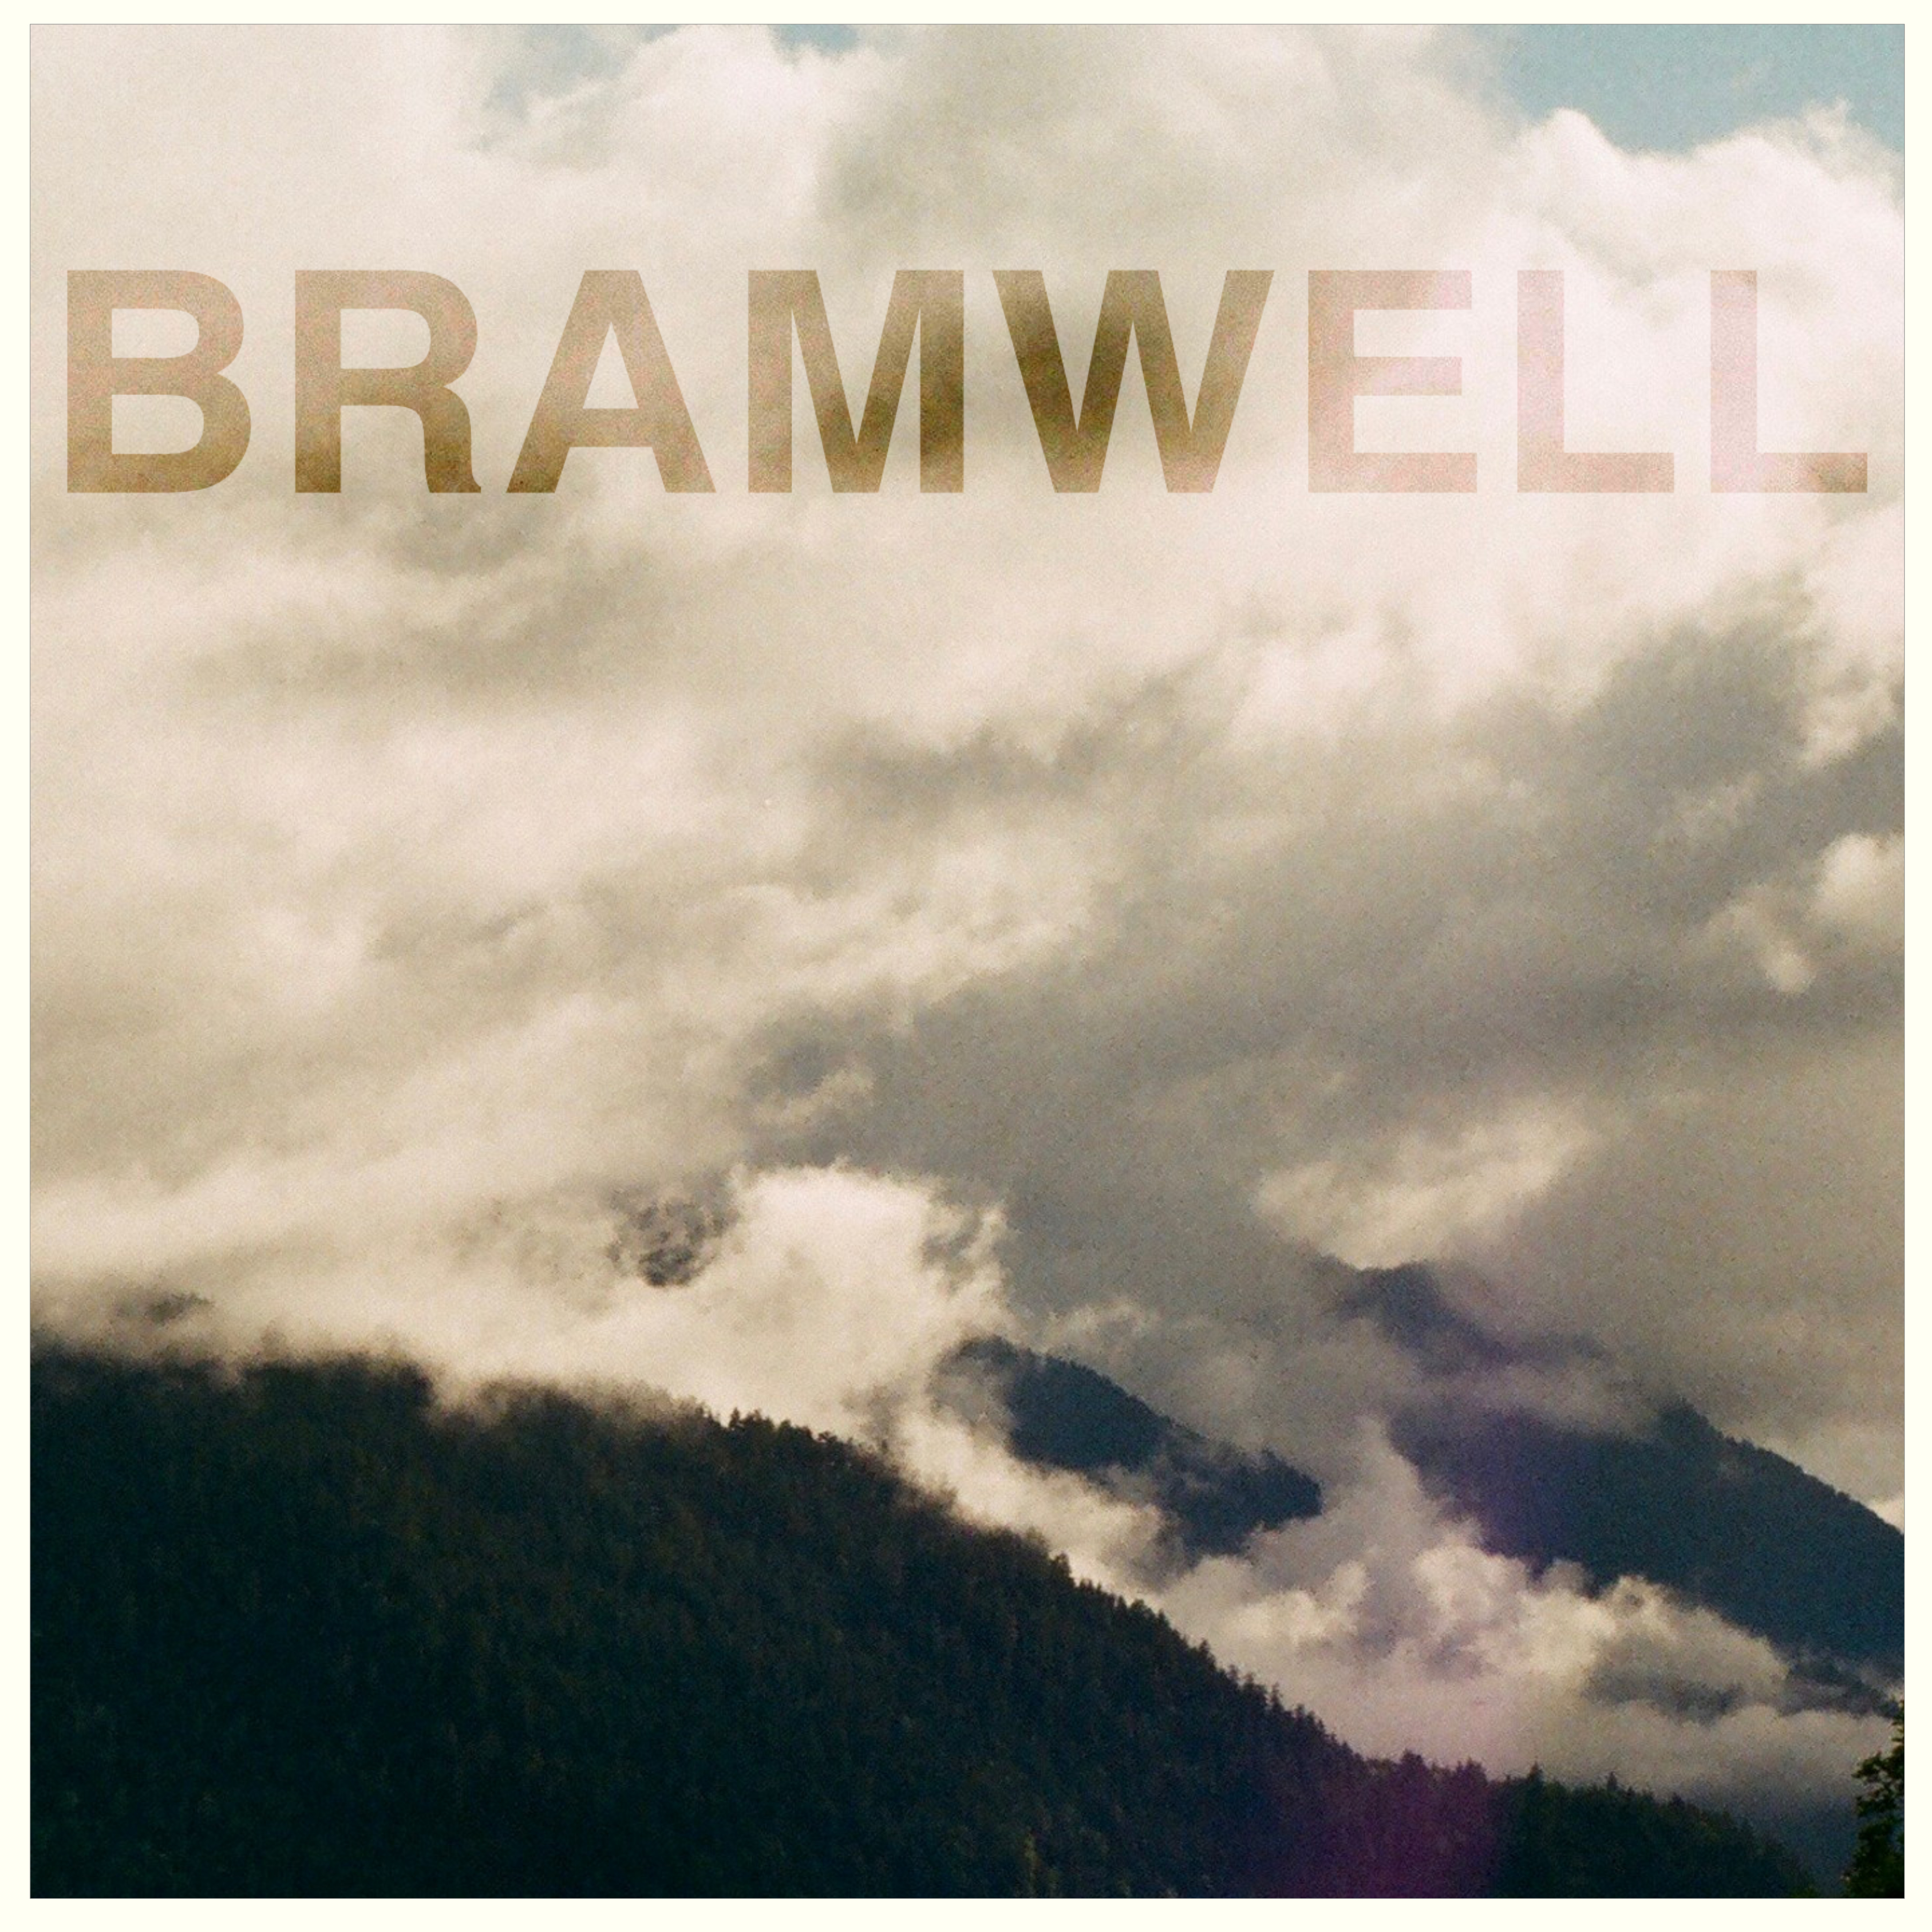 The first Bramwell album